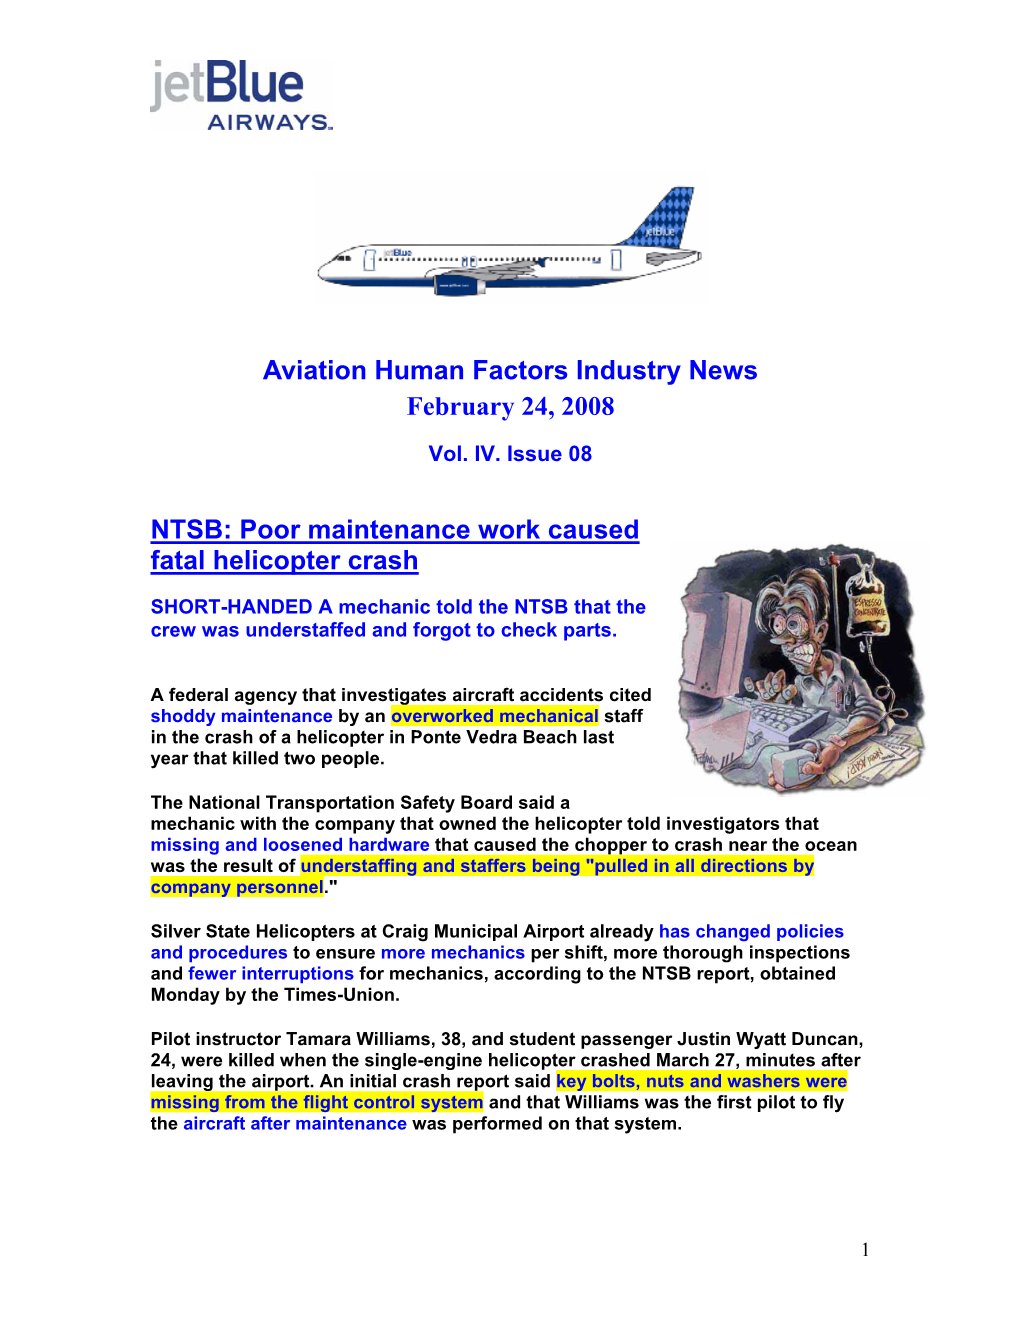 Aviation Human Factors Industry News February 24, 2008